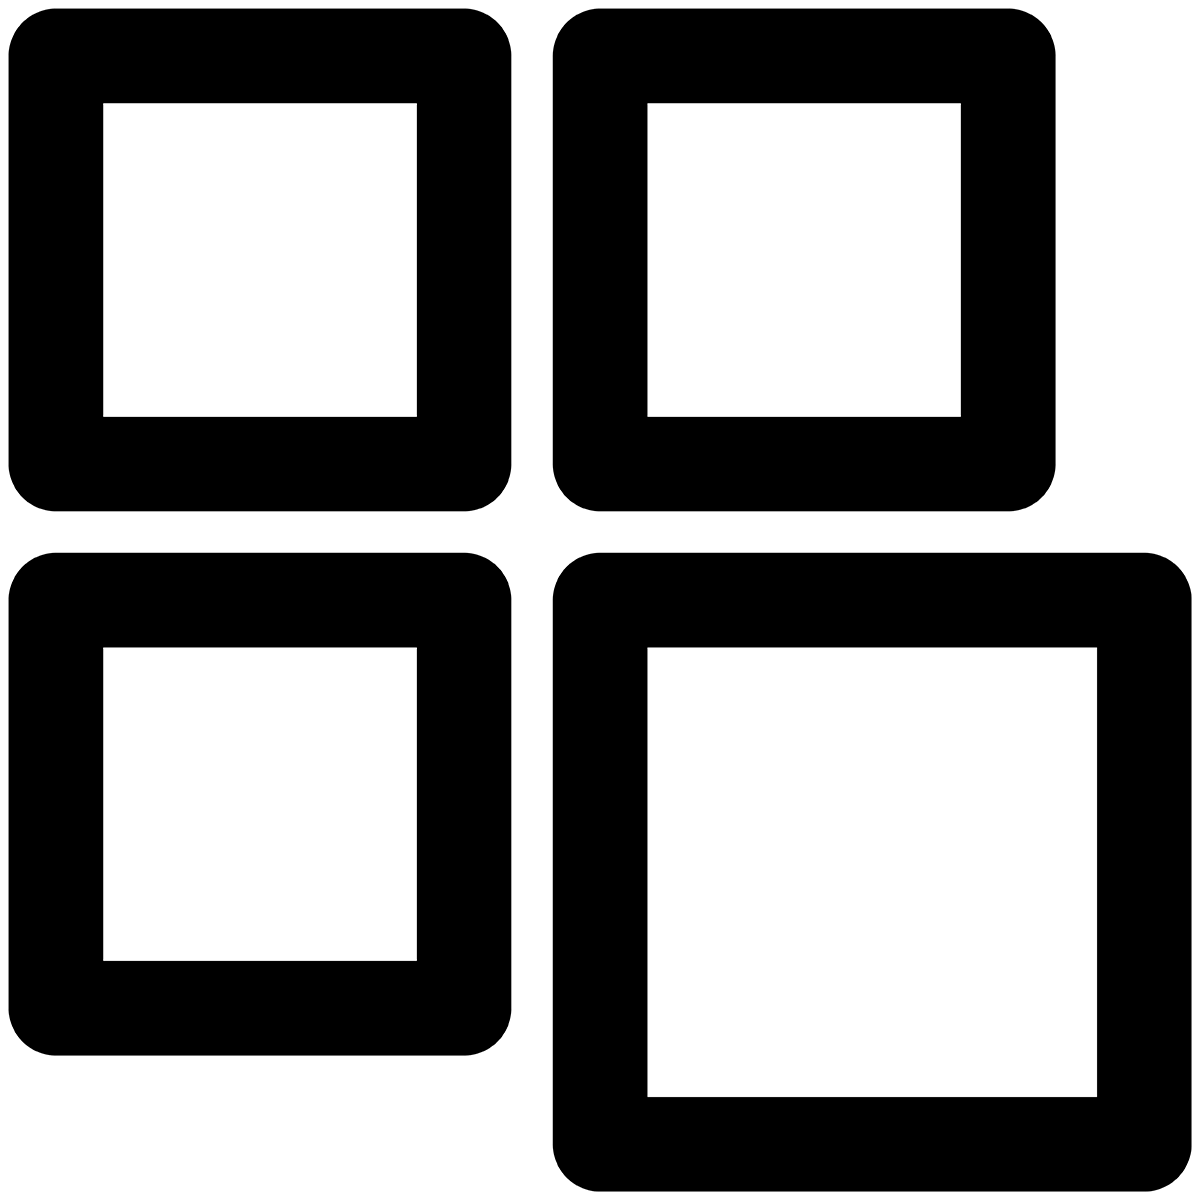 box symbol representing a searchable content library